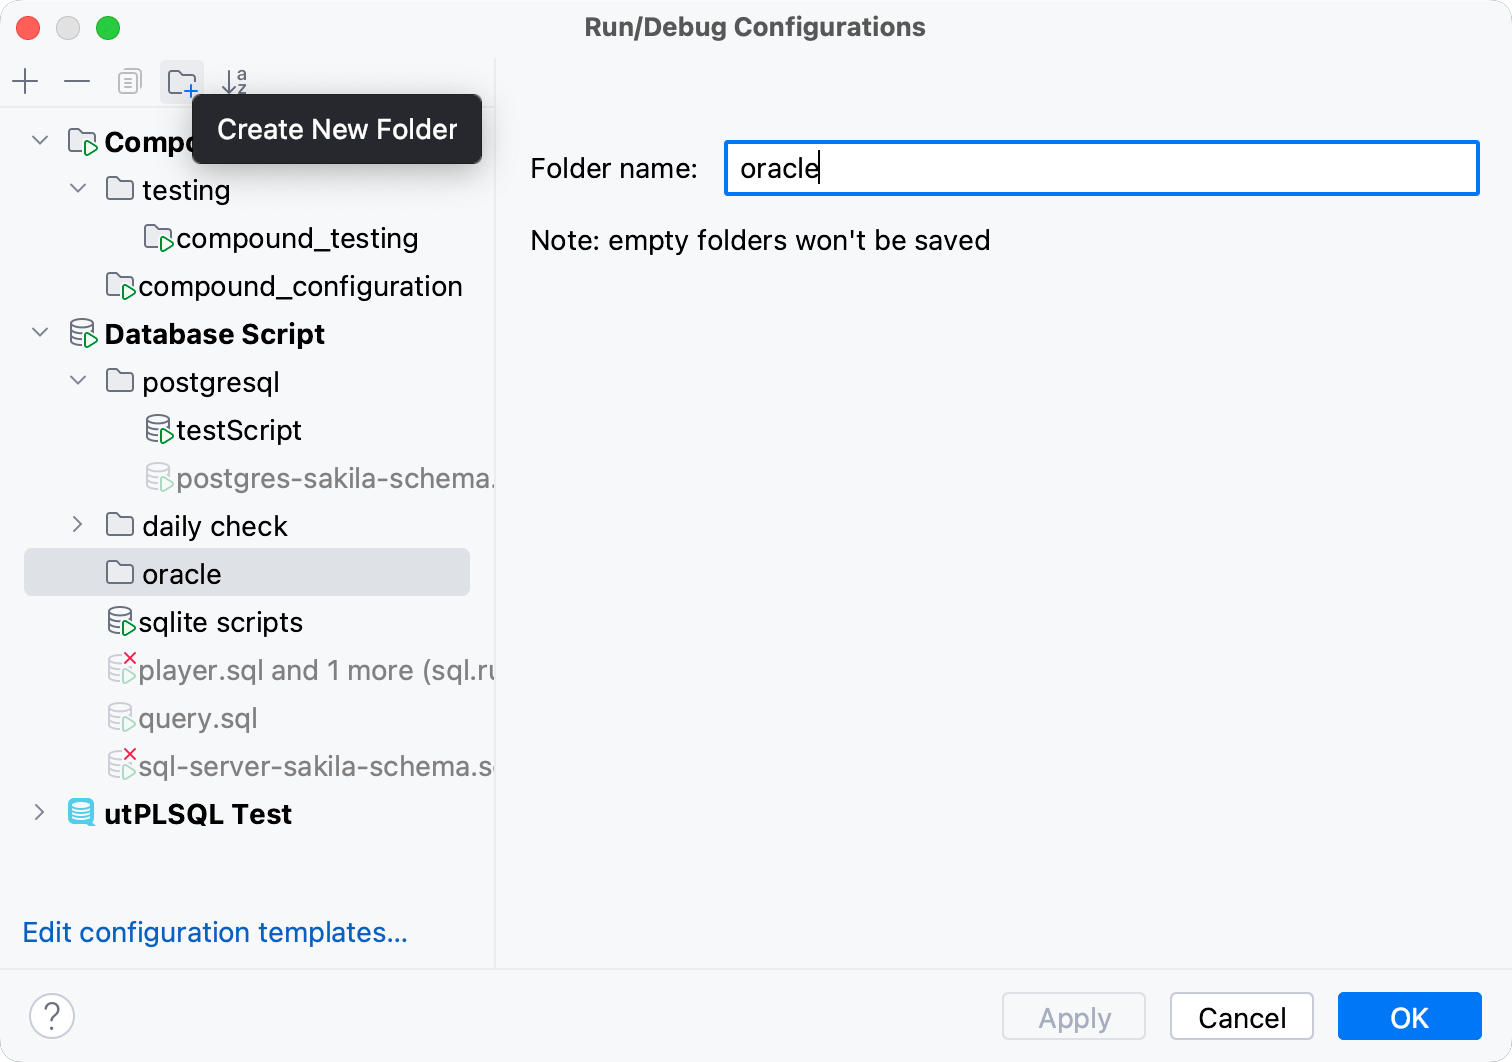 Create a new folder for run configurations